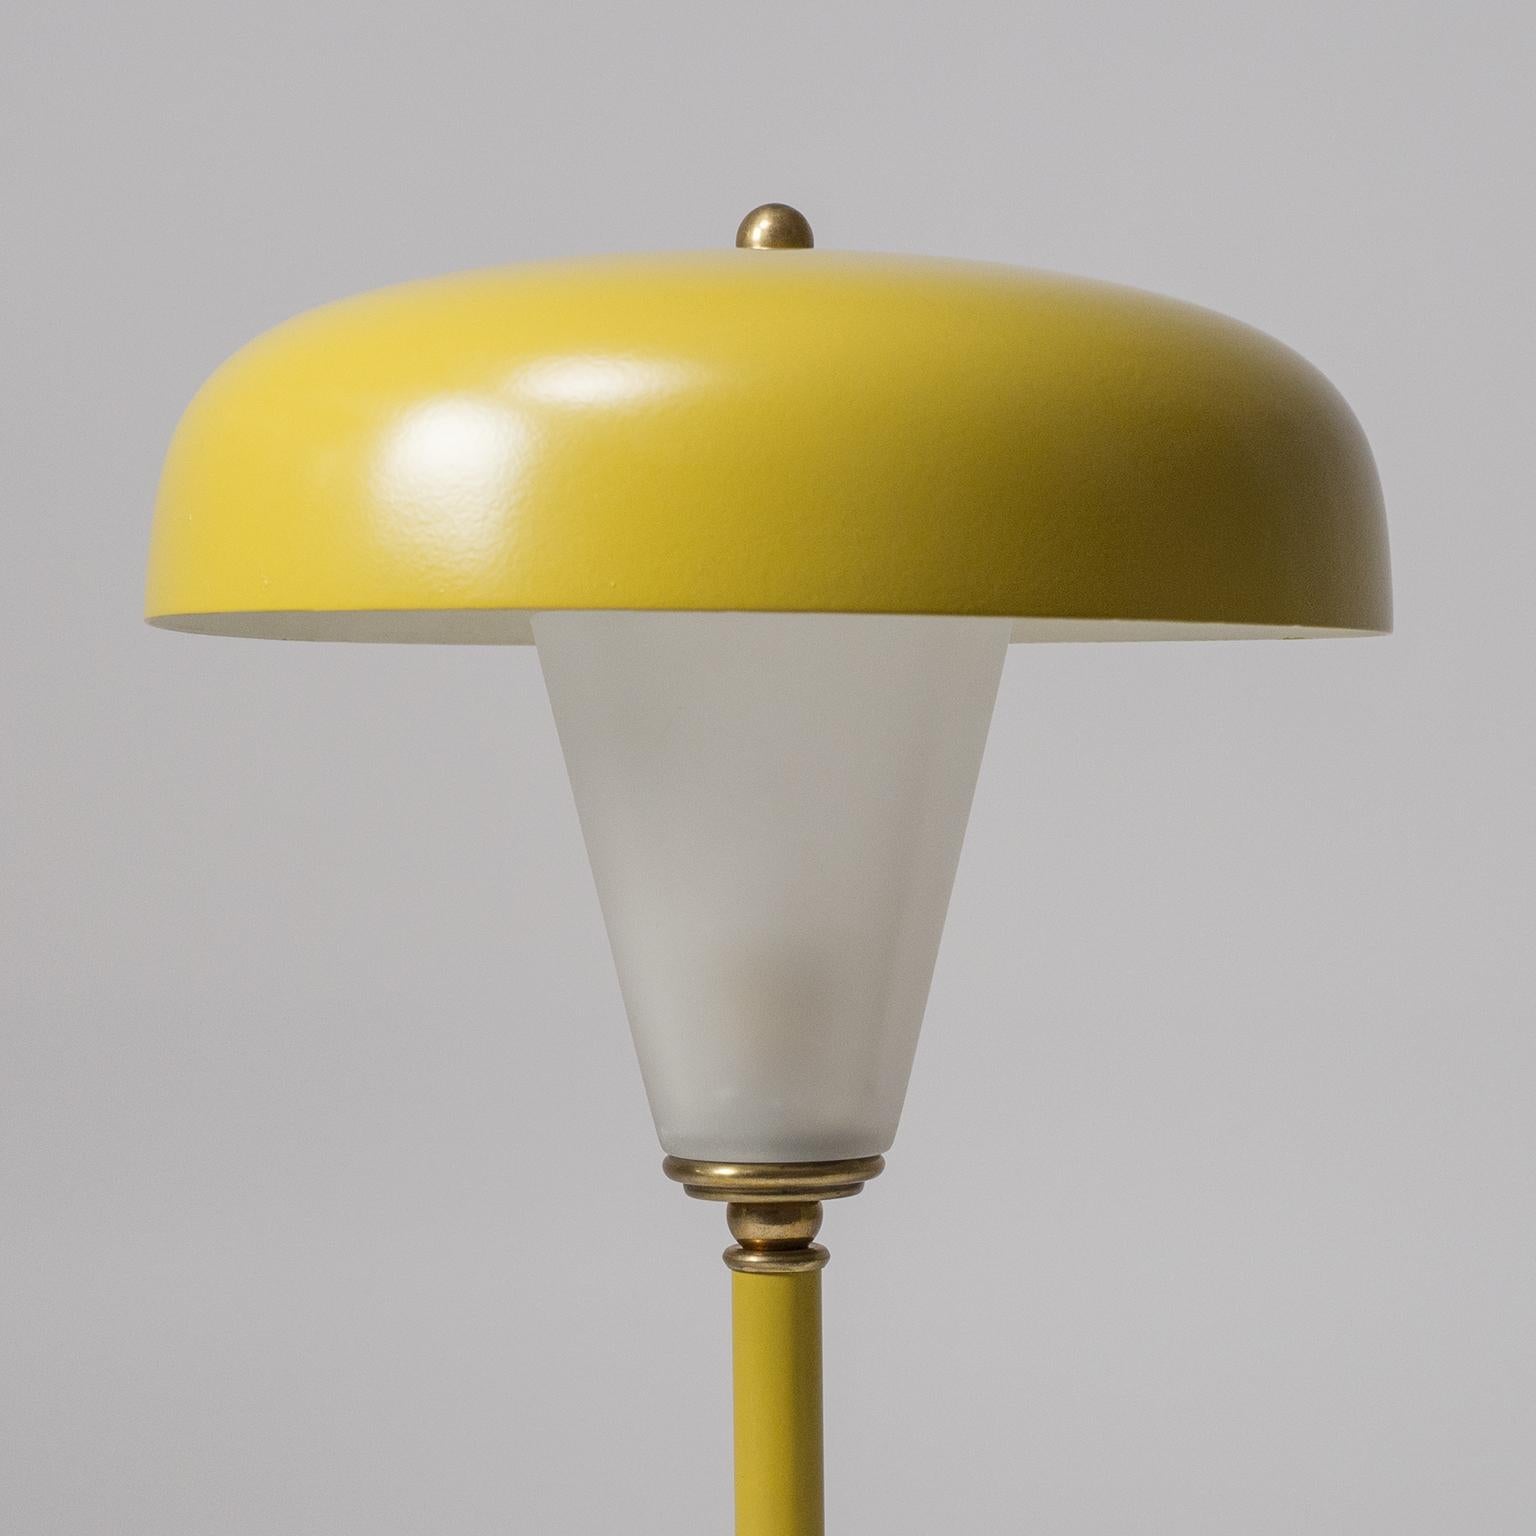 French Art Deco Lantern Table Lamp, 1940s (Art déco)